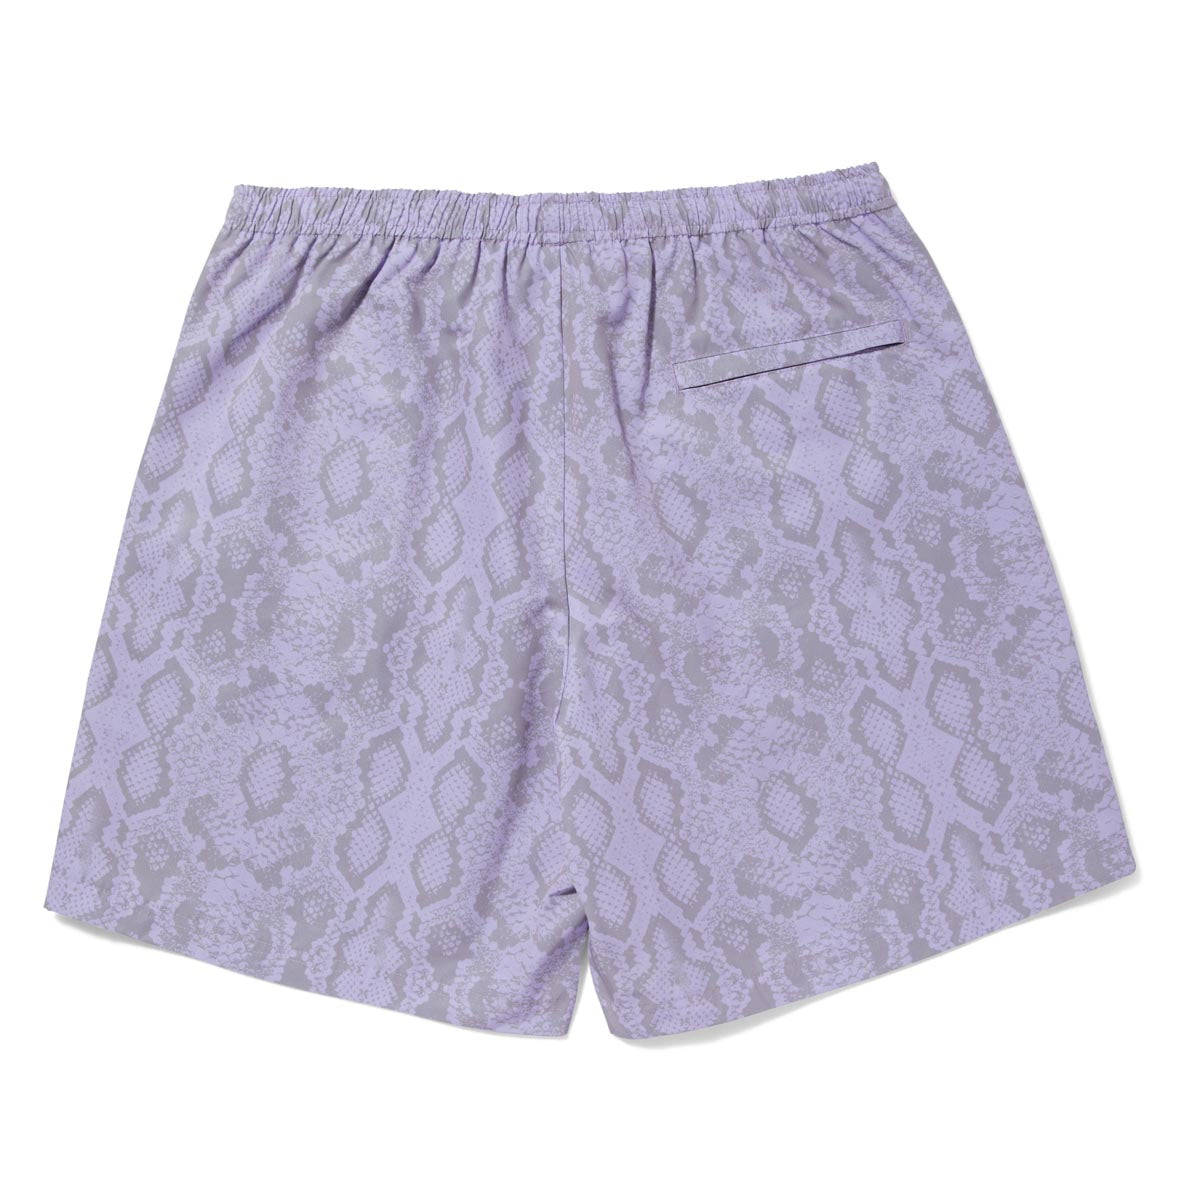 HUF Instinct Easy Shorts - Purple image 2